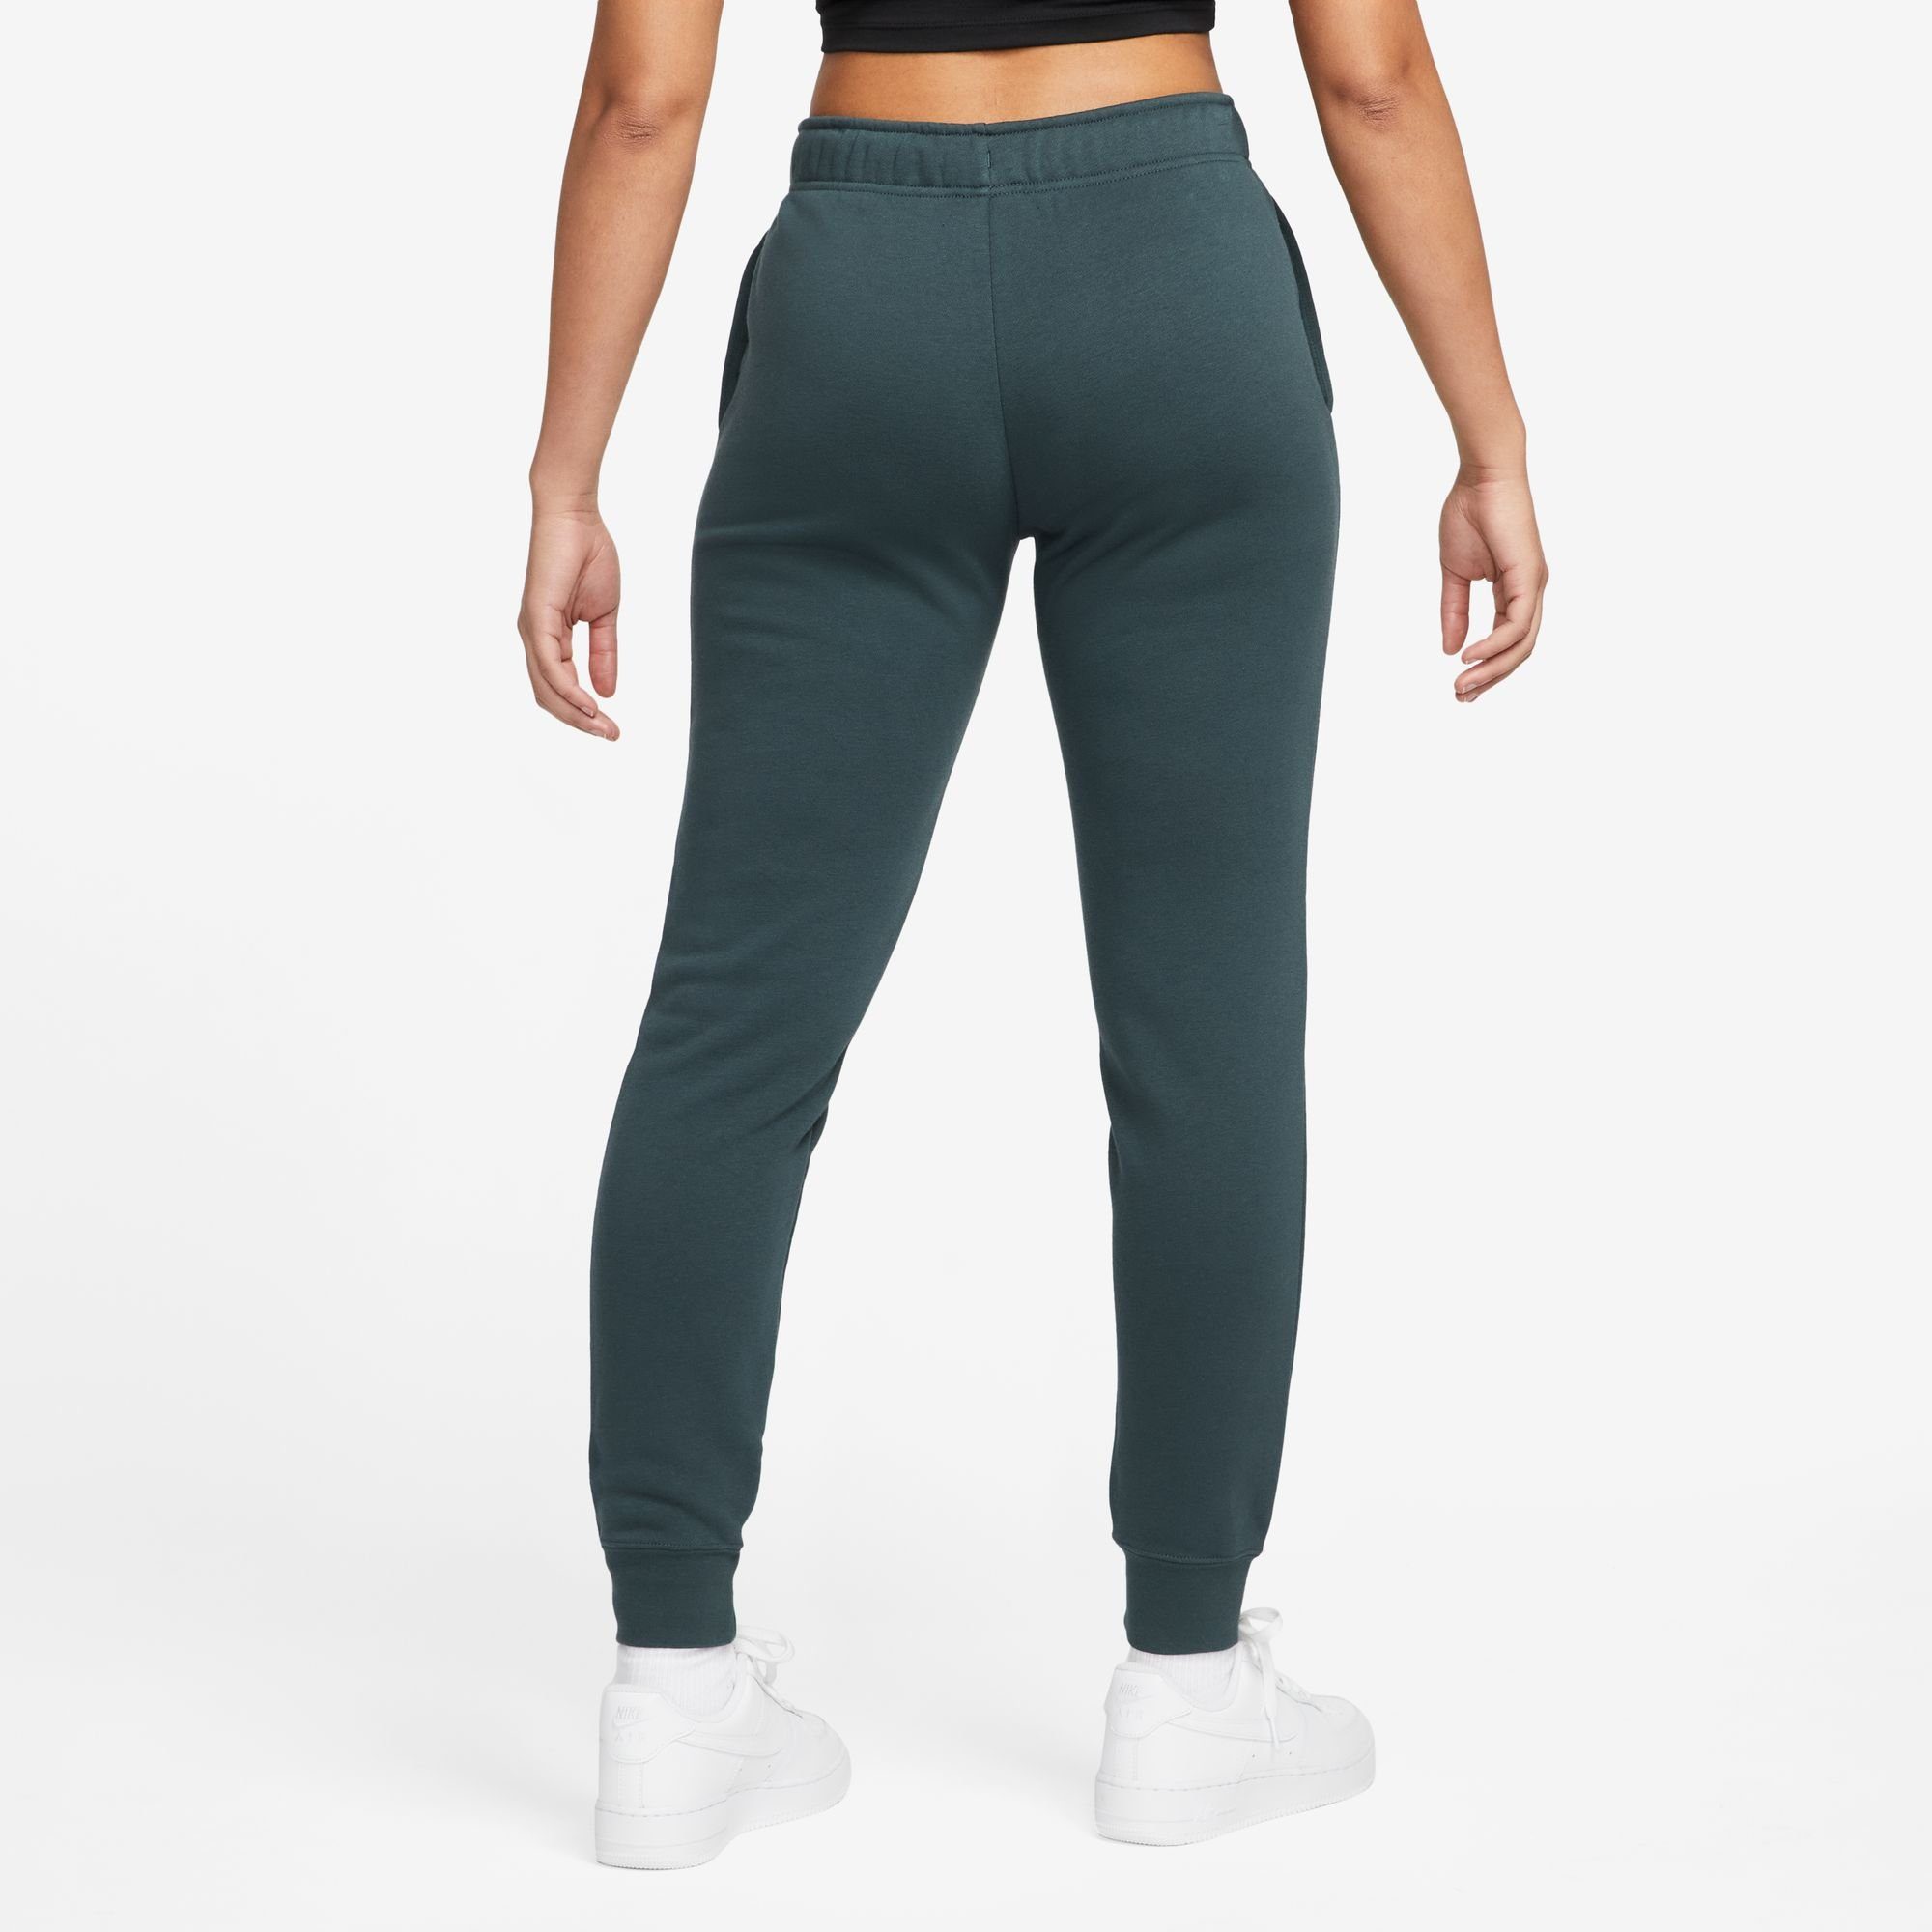 Grüne Nike Damen Jogginghosen online kaufen | OTTO